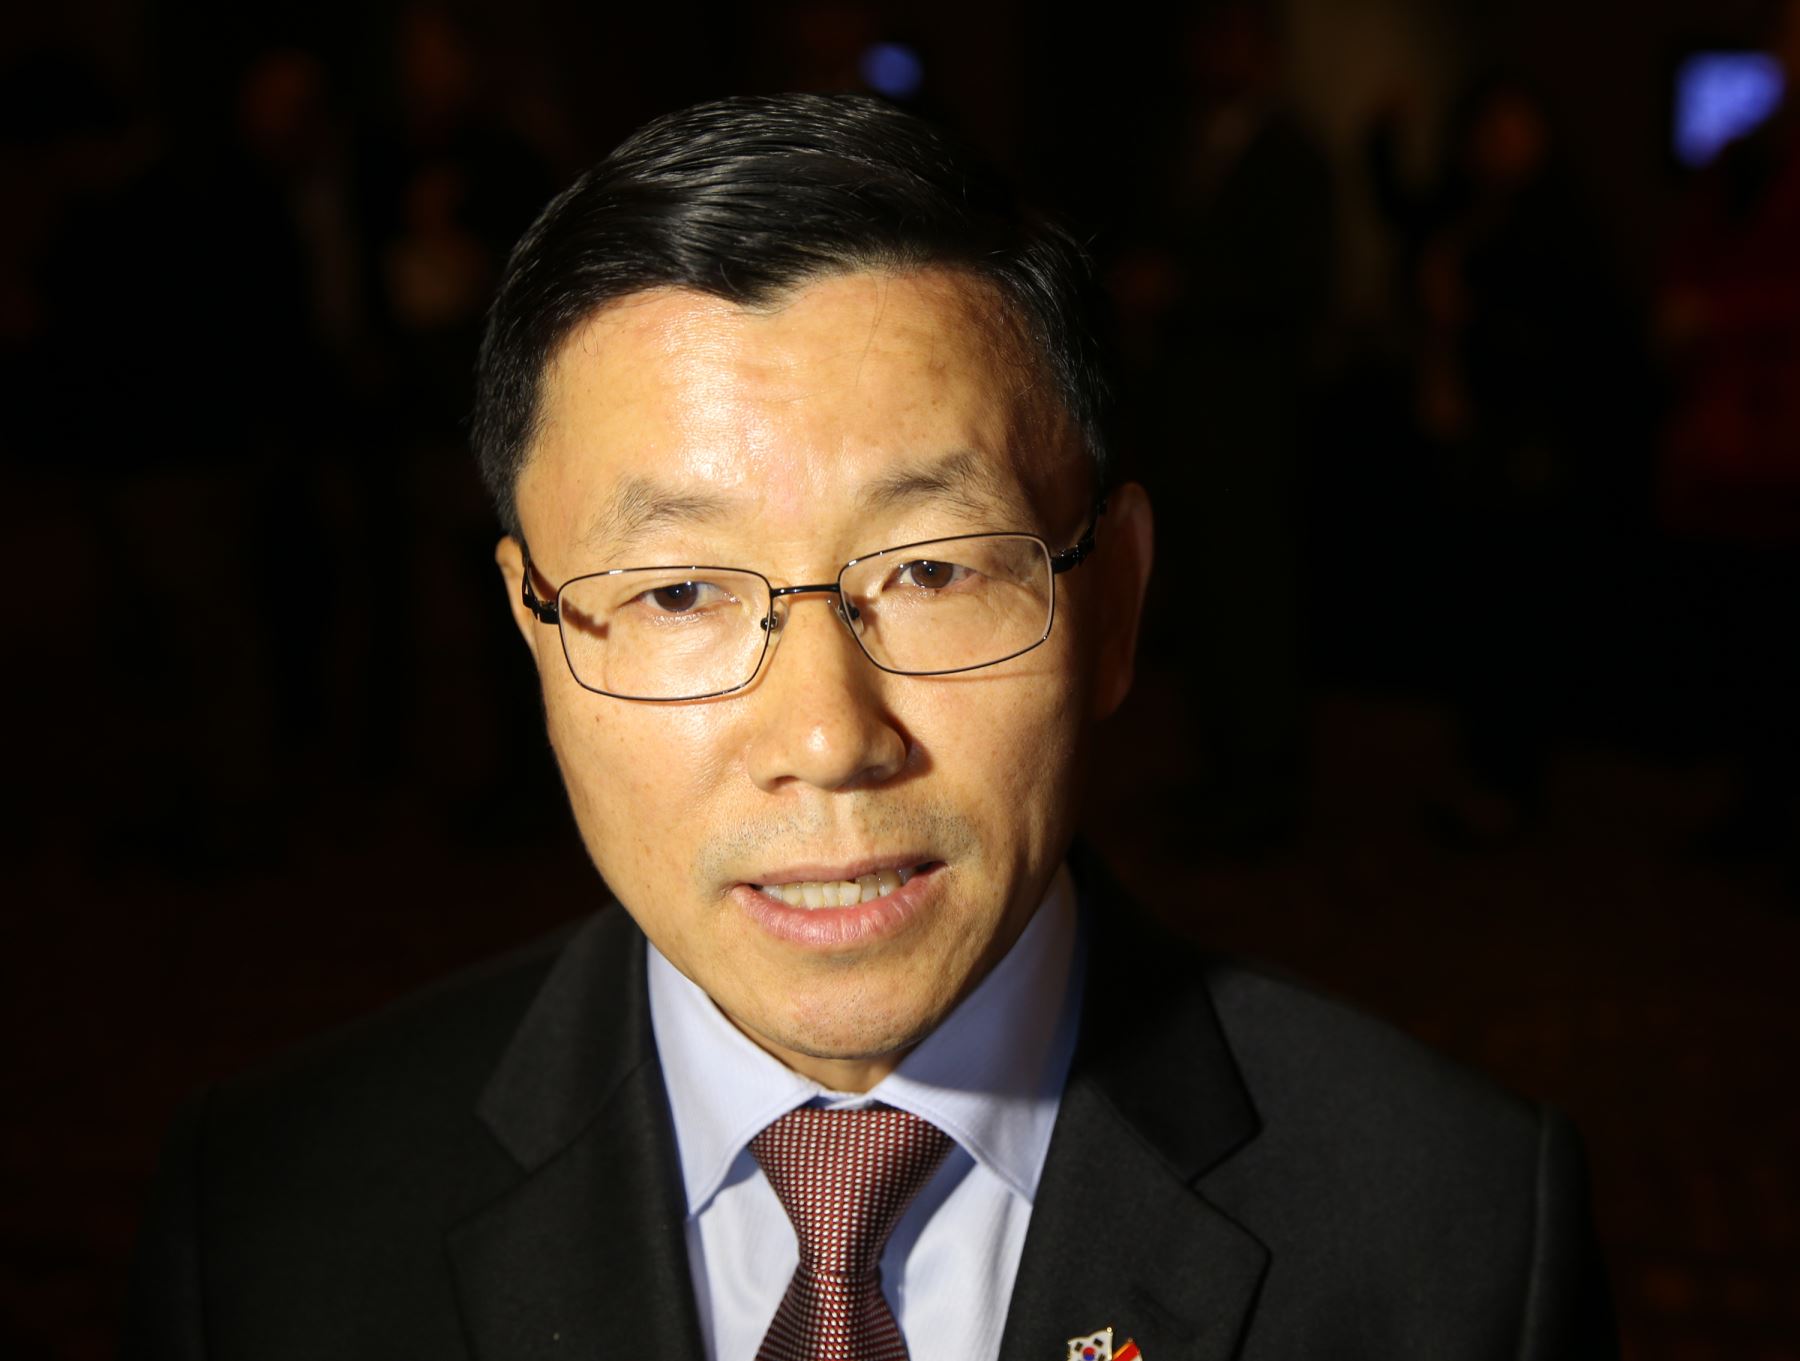 Embajador de Corea: “Invertimos casi US$ 4,200 mlls. en el sector energético del Perú”